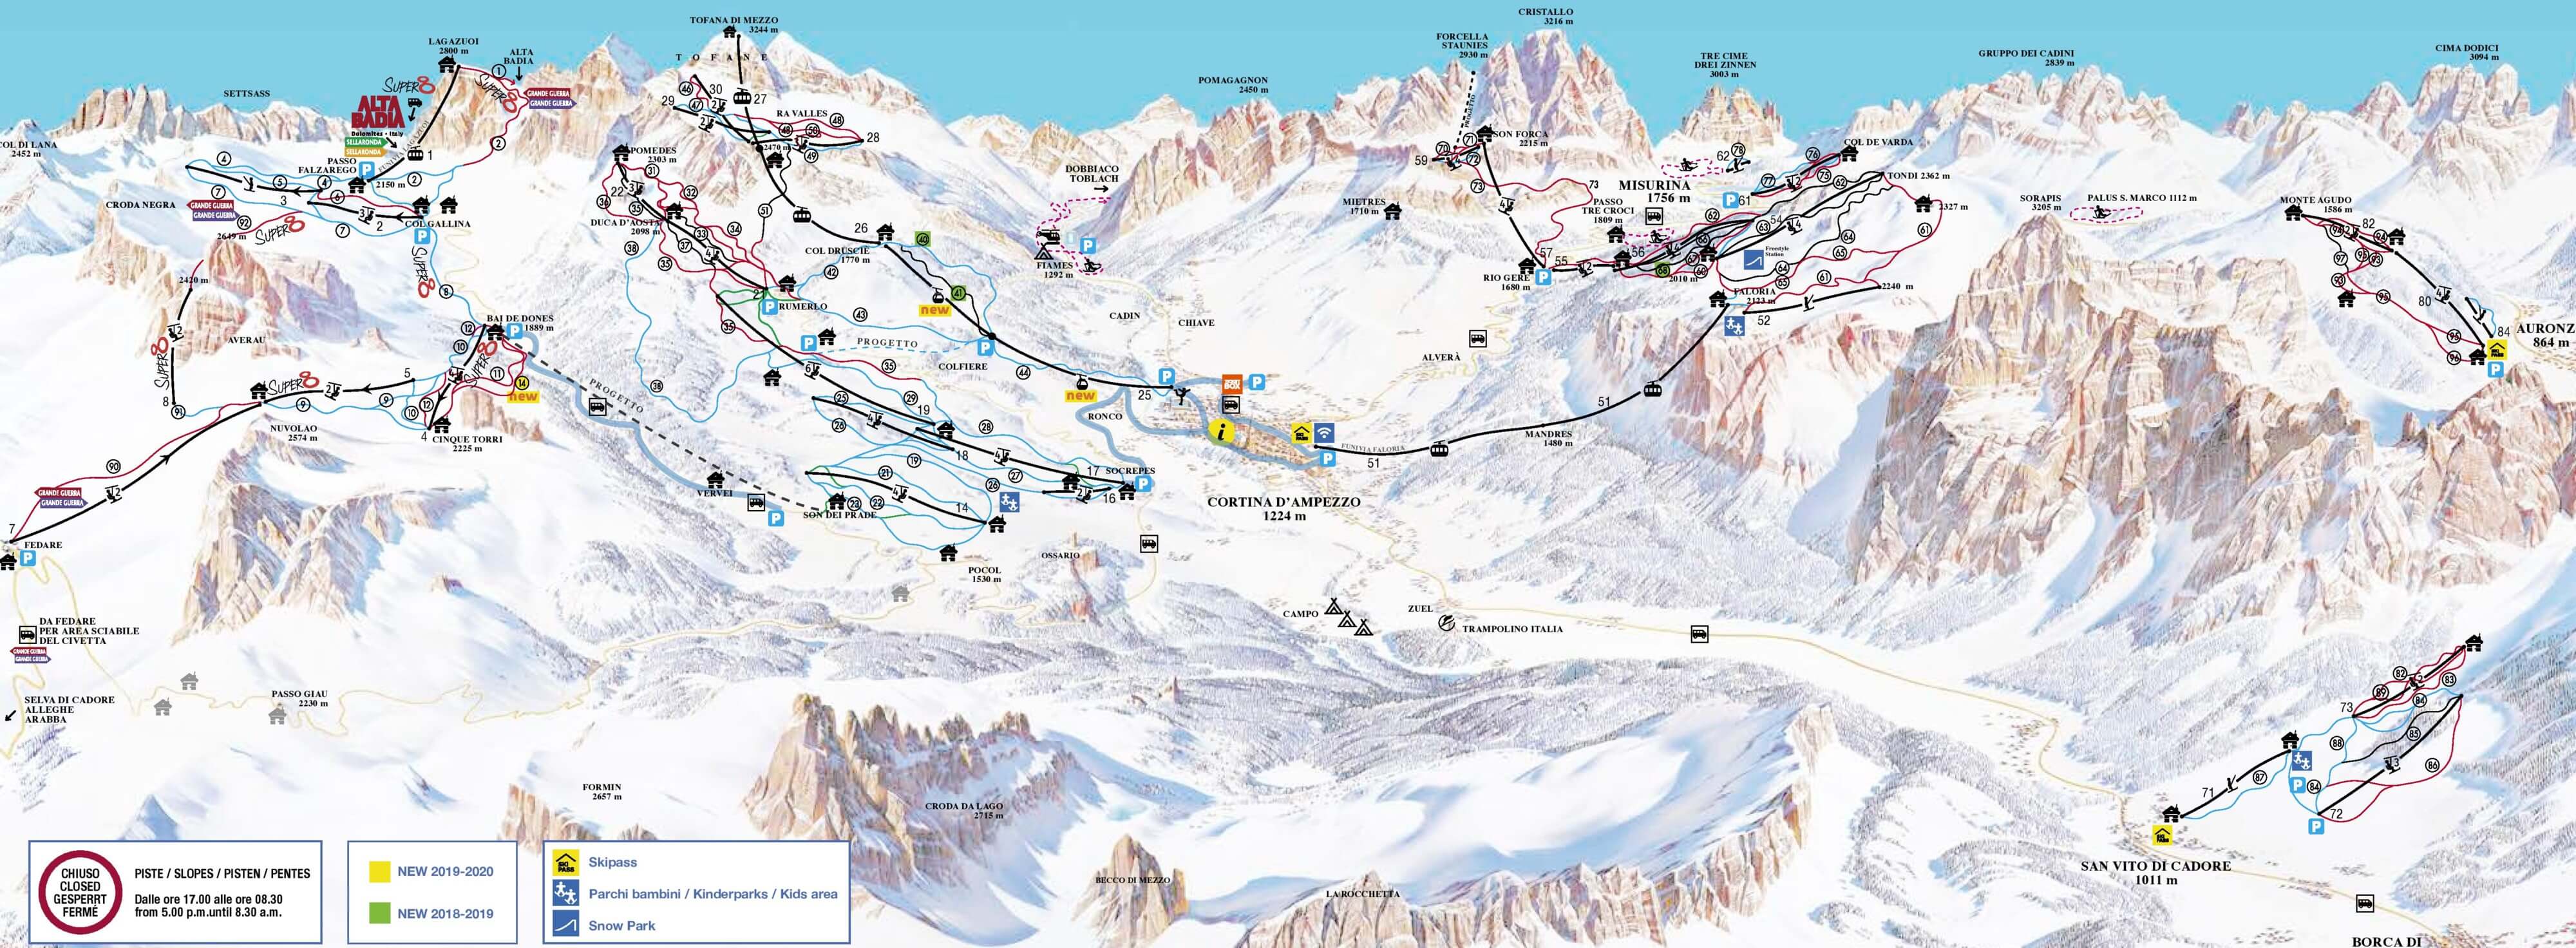 Cortina d'Ampezzo slopes